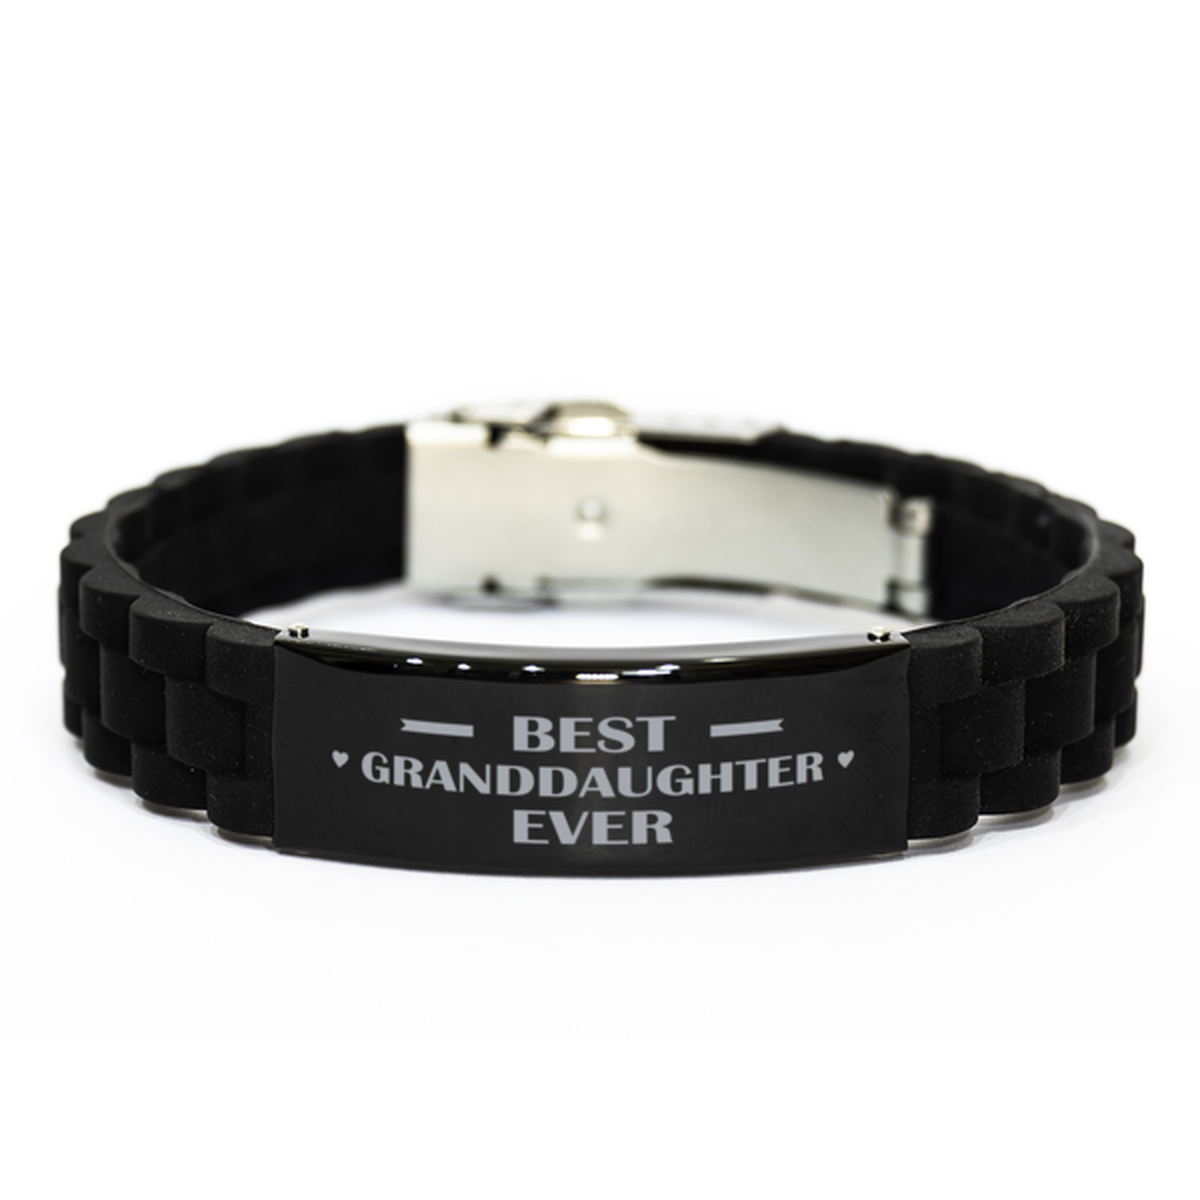 Best Granddaughter Ever Granddaughter Gifts, Funny Black Engraved Bracelet For Granddaughter, Family Gifts For Women